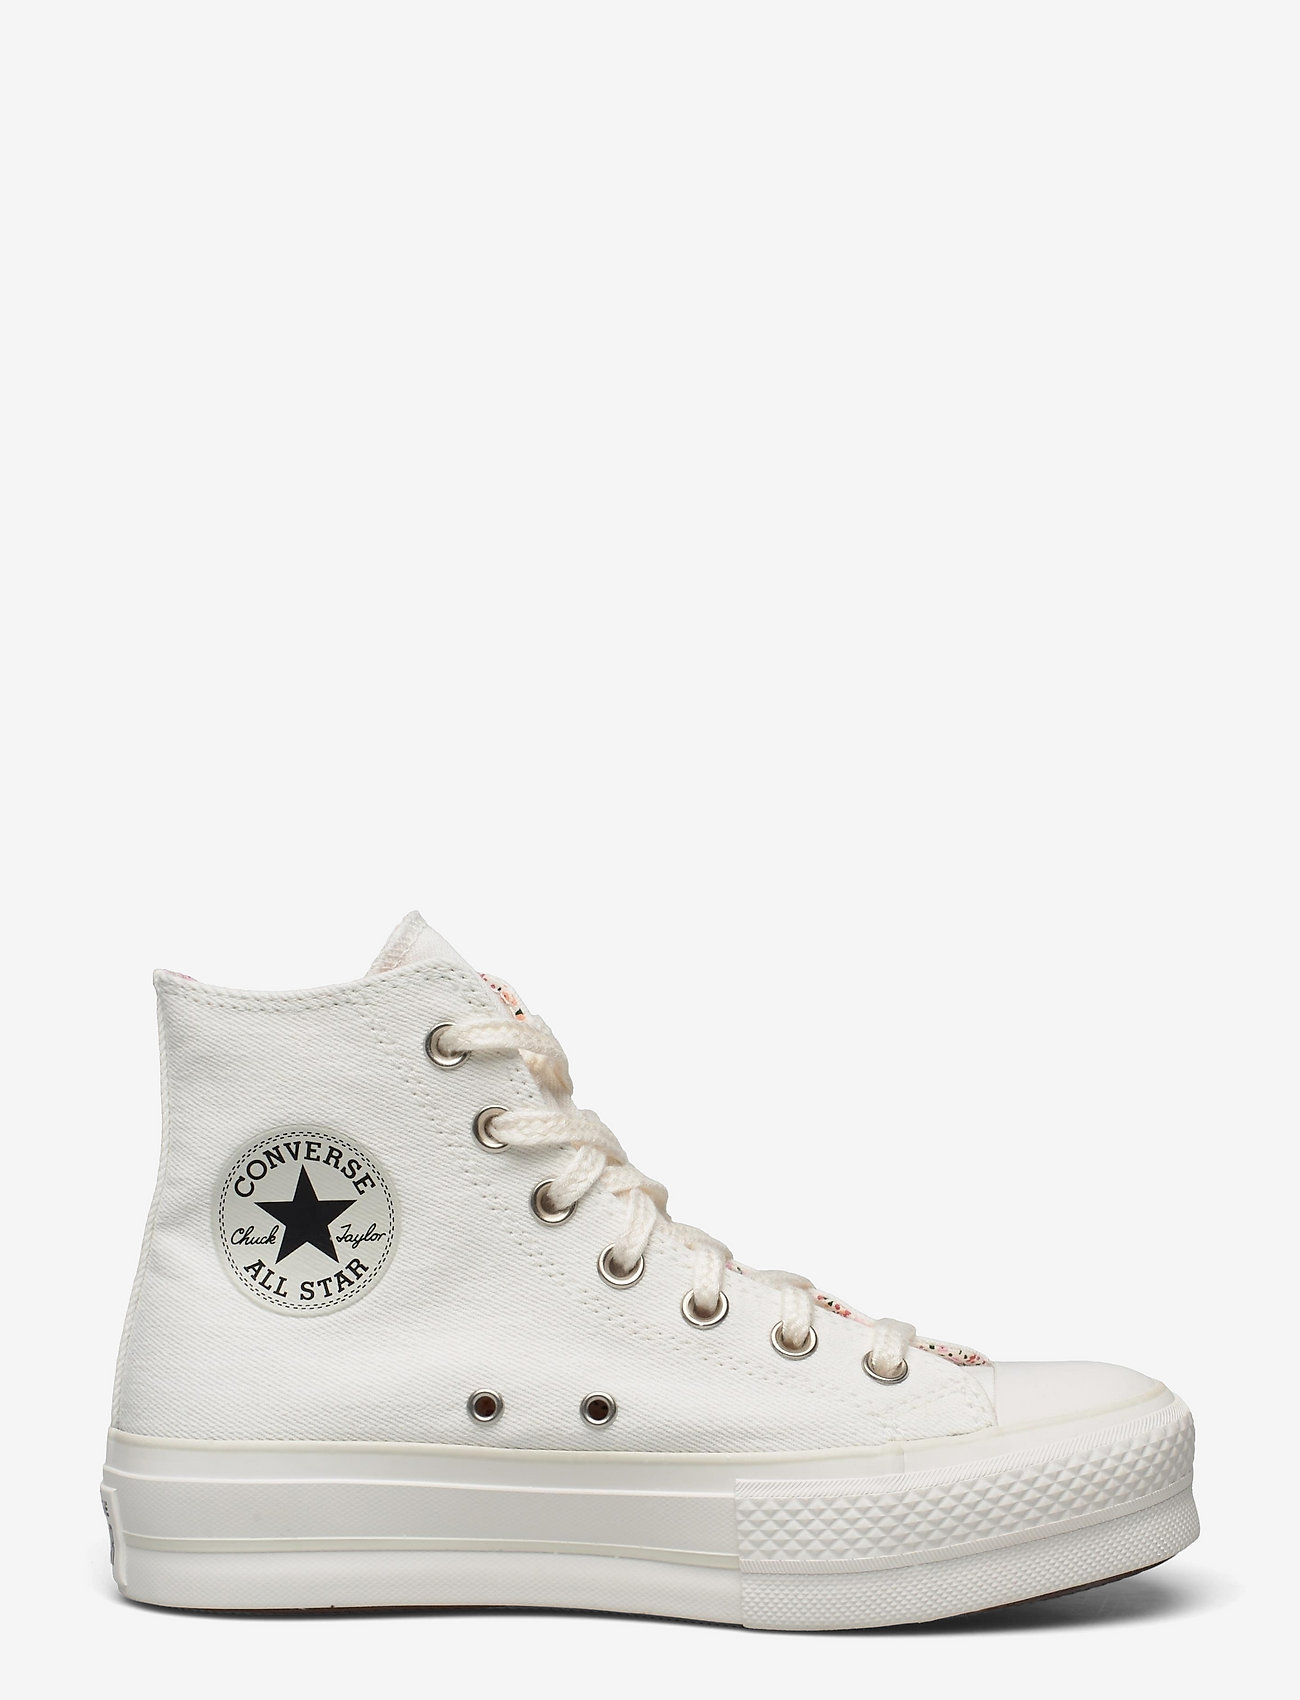 Converse Chuck Taylor All Star Lift - High top sneakers | Boozt.com